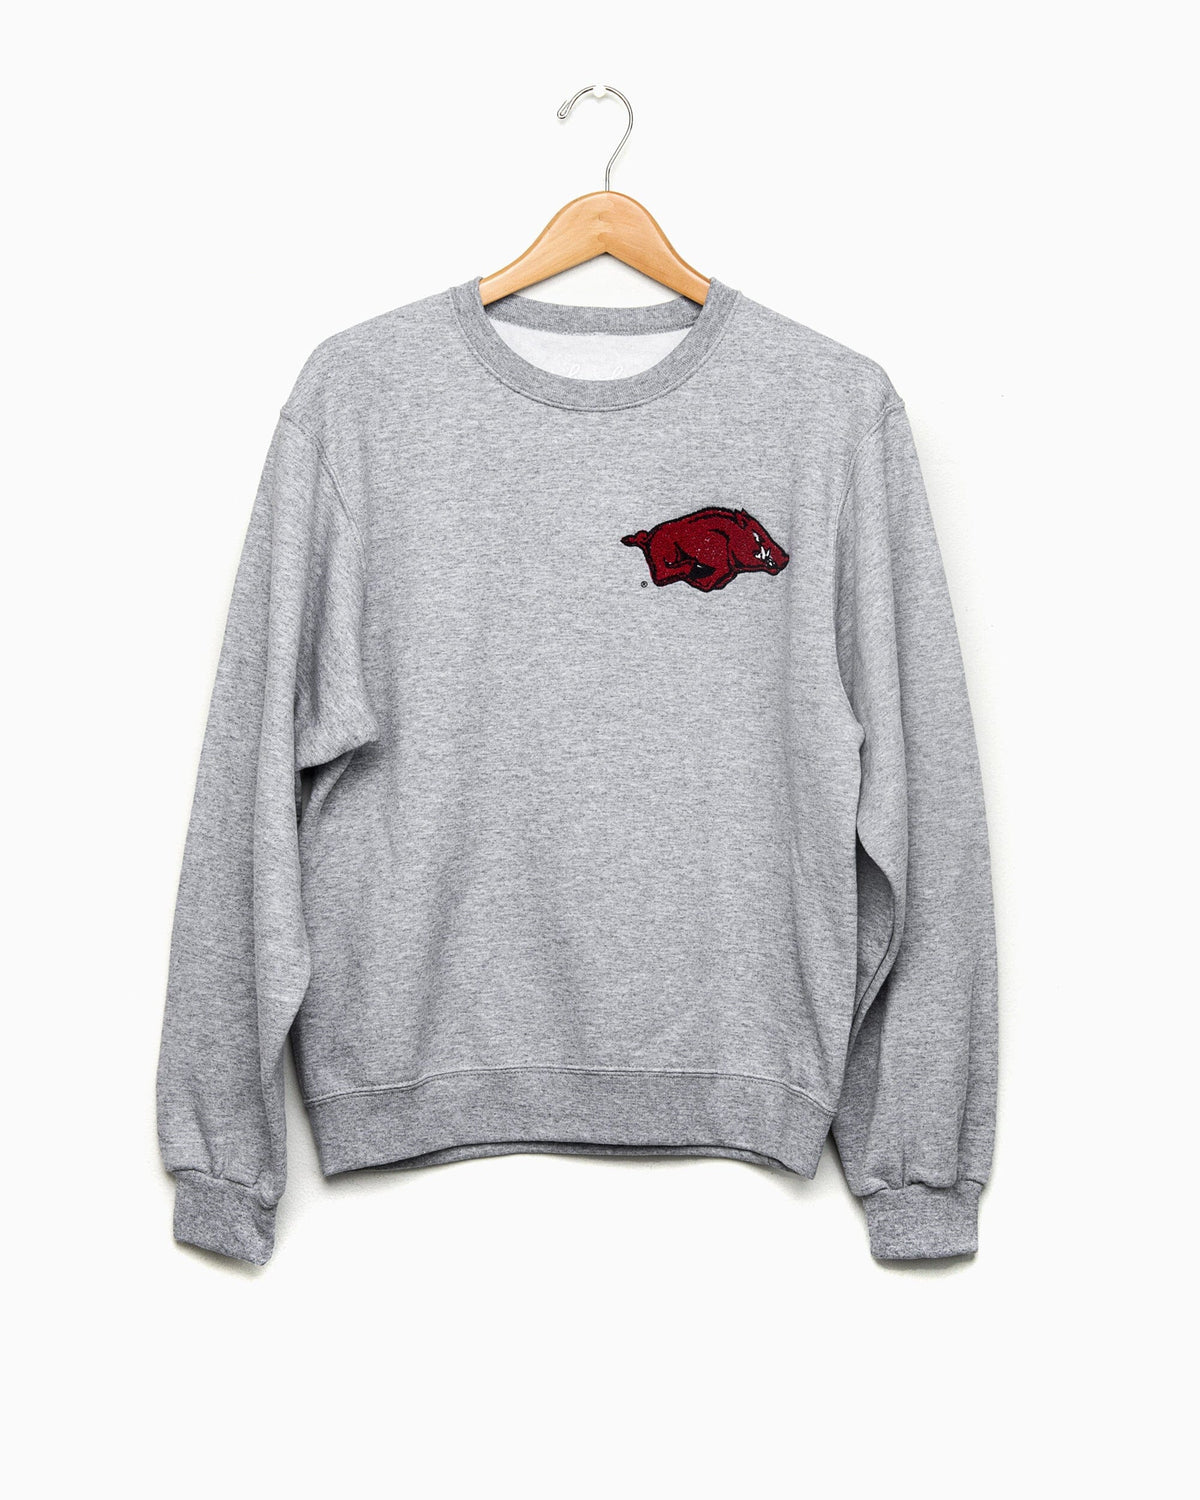 Arkansas Razorbacks Chenille Patch Gray Sweatshirt